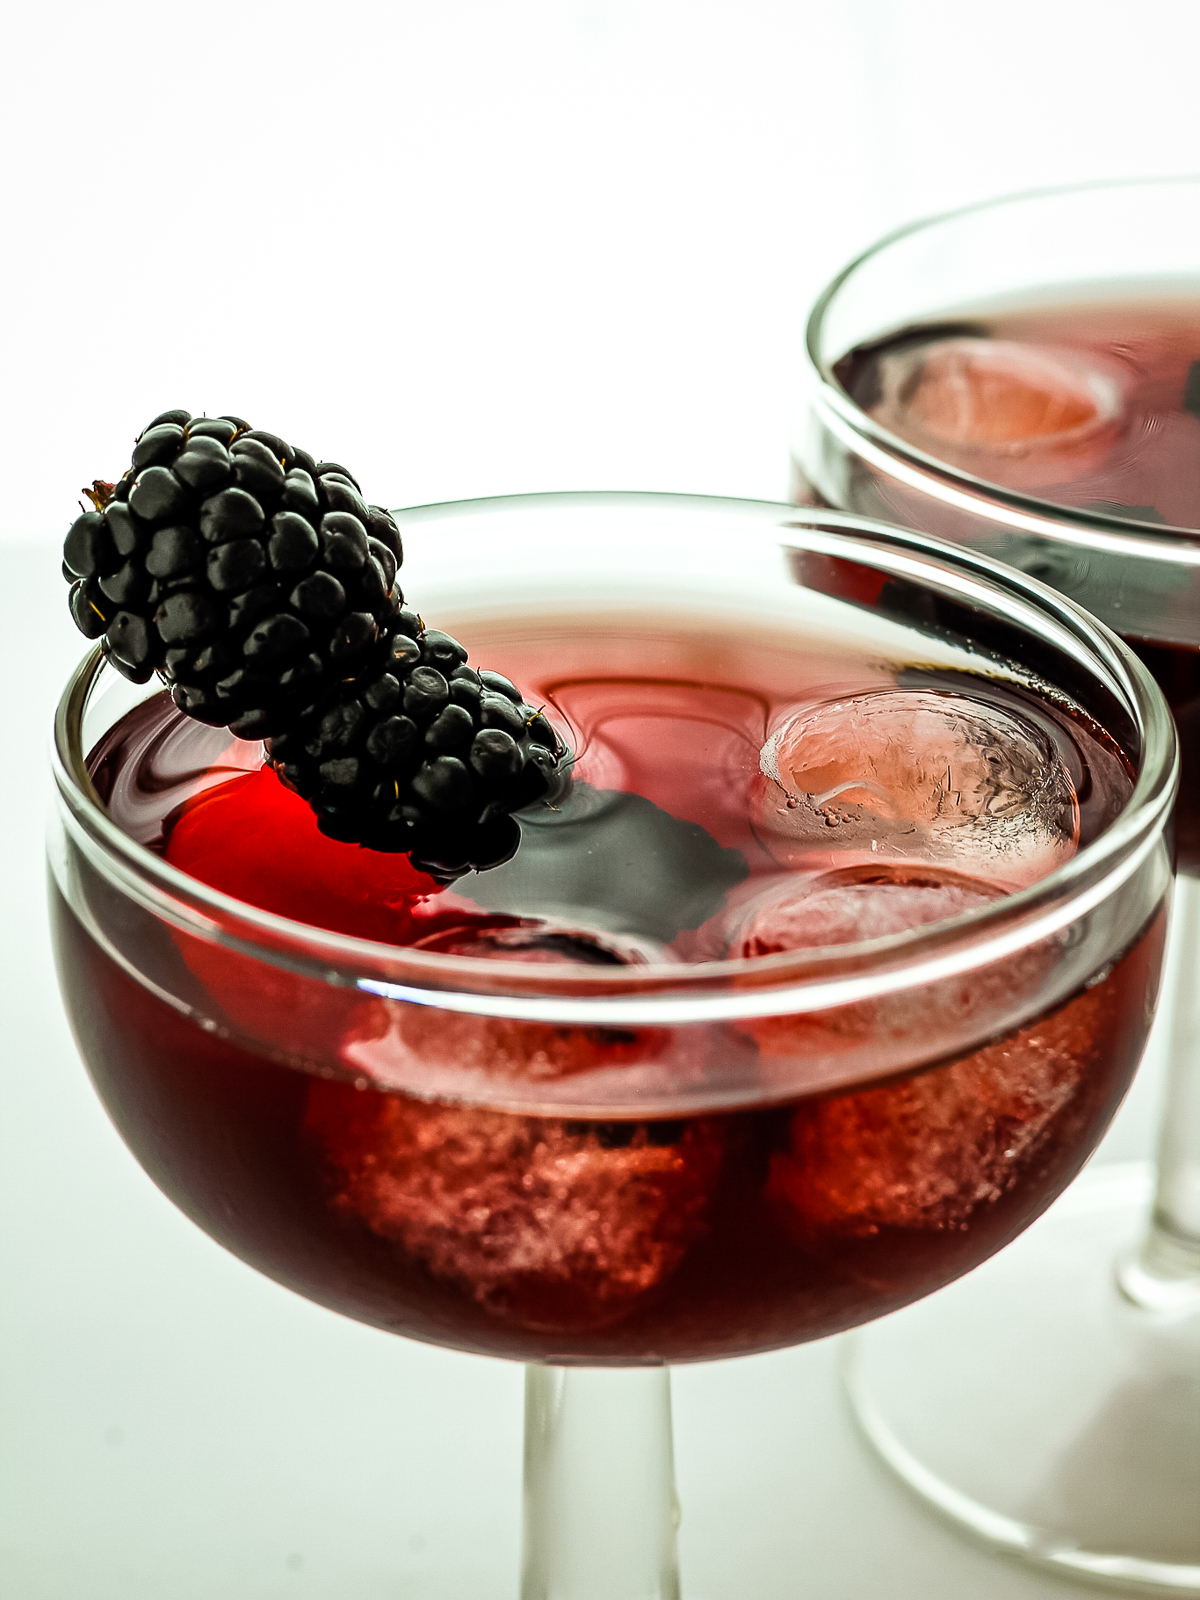 blackberry tea in a glass with blackberries